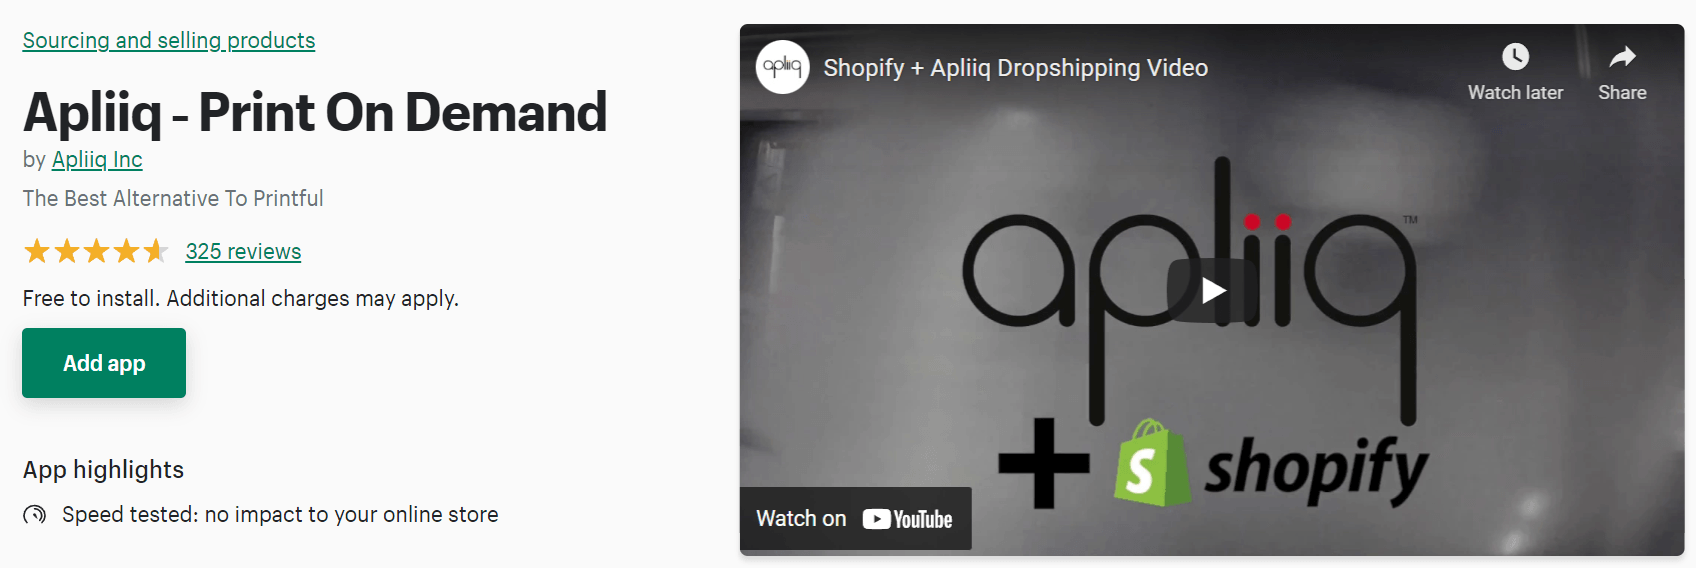 Apliiq print-on-demand service